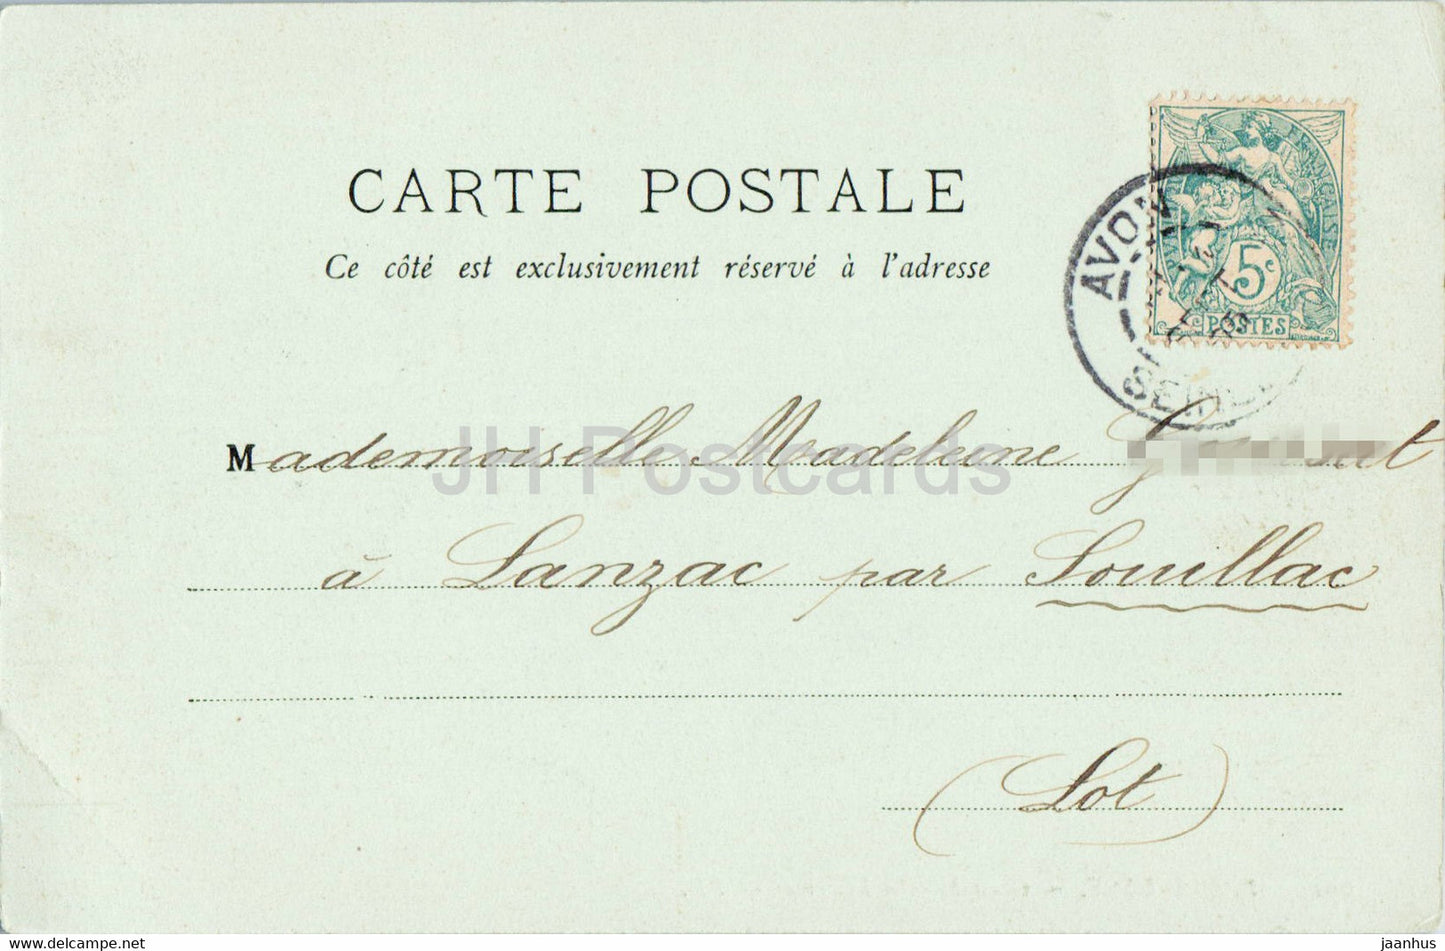 Mont Ussy - Oasis Marion Delorme - 201 - old postcard - 1905 - France - used